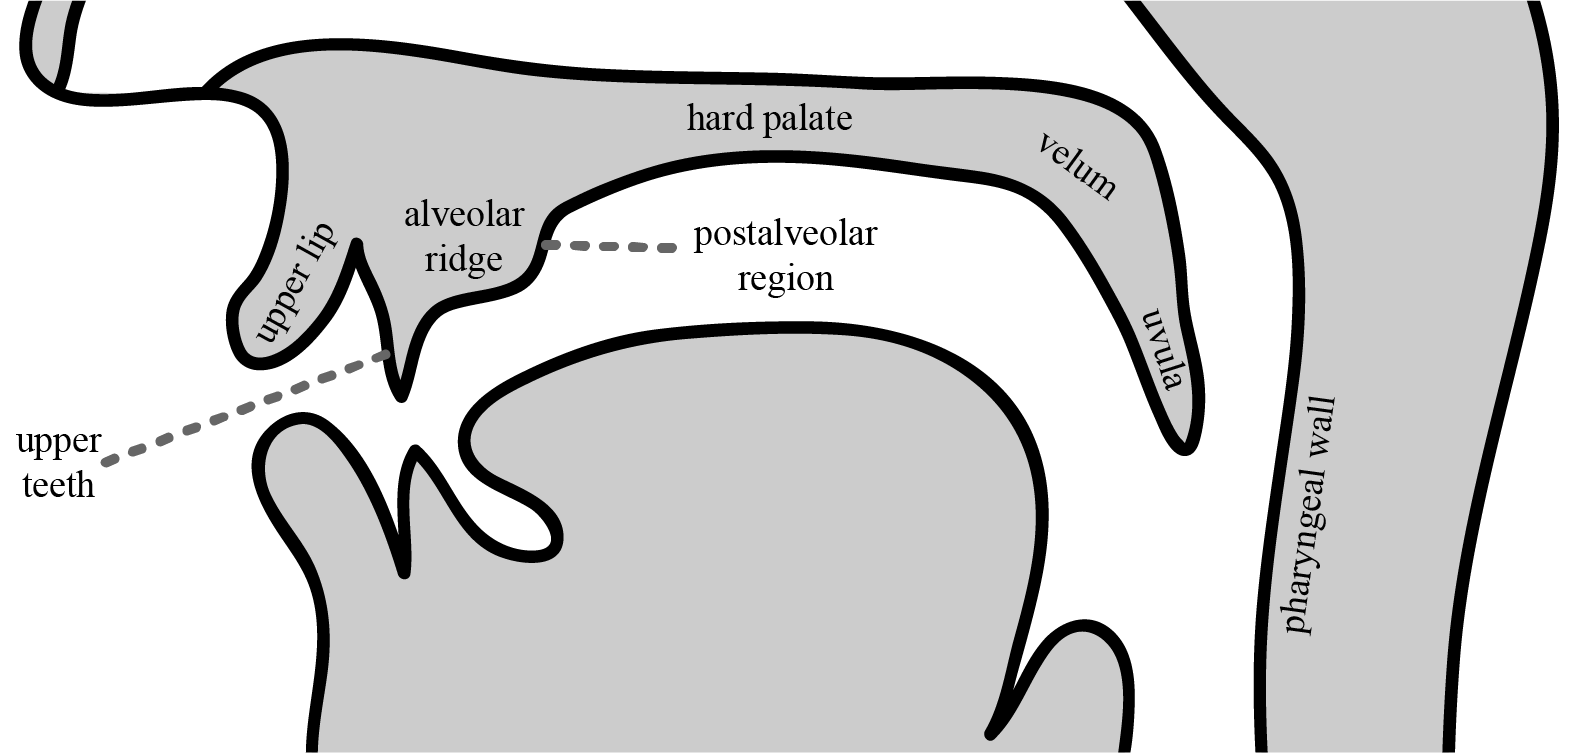 Midsagittal view of the passive articulators, labelled from left going clockwise: upper lip, upper teeth, alveolar ridge, postalveolar region, hard palate, velum, uvula, and pharyngeal wall.